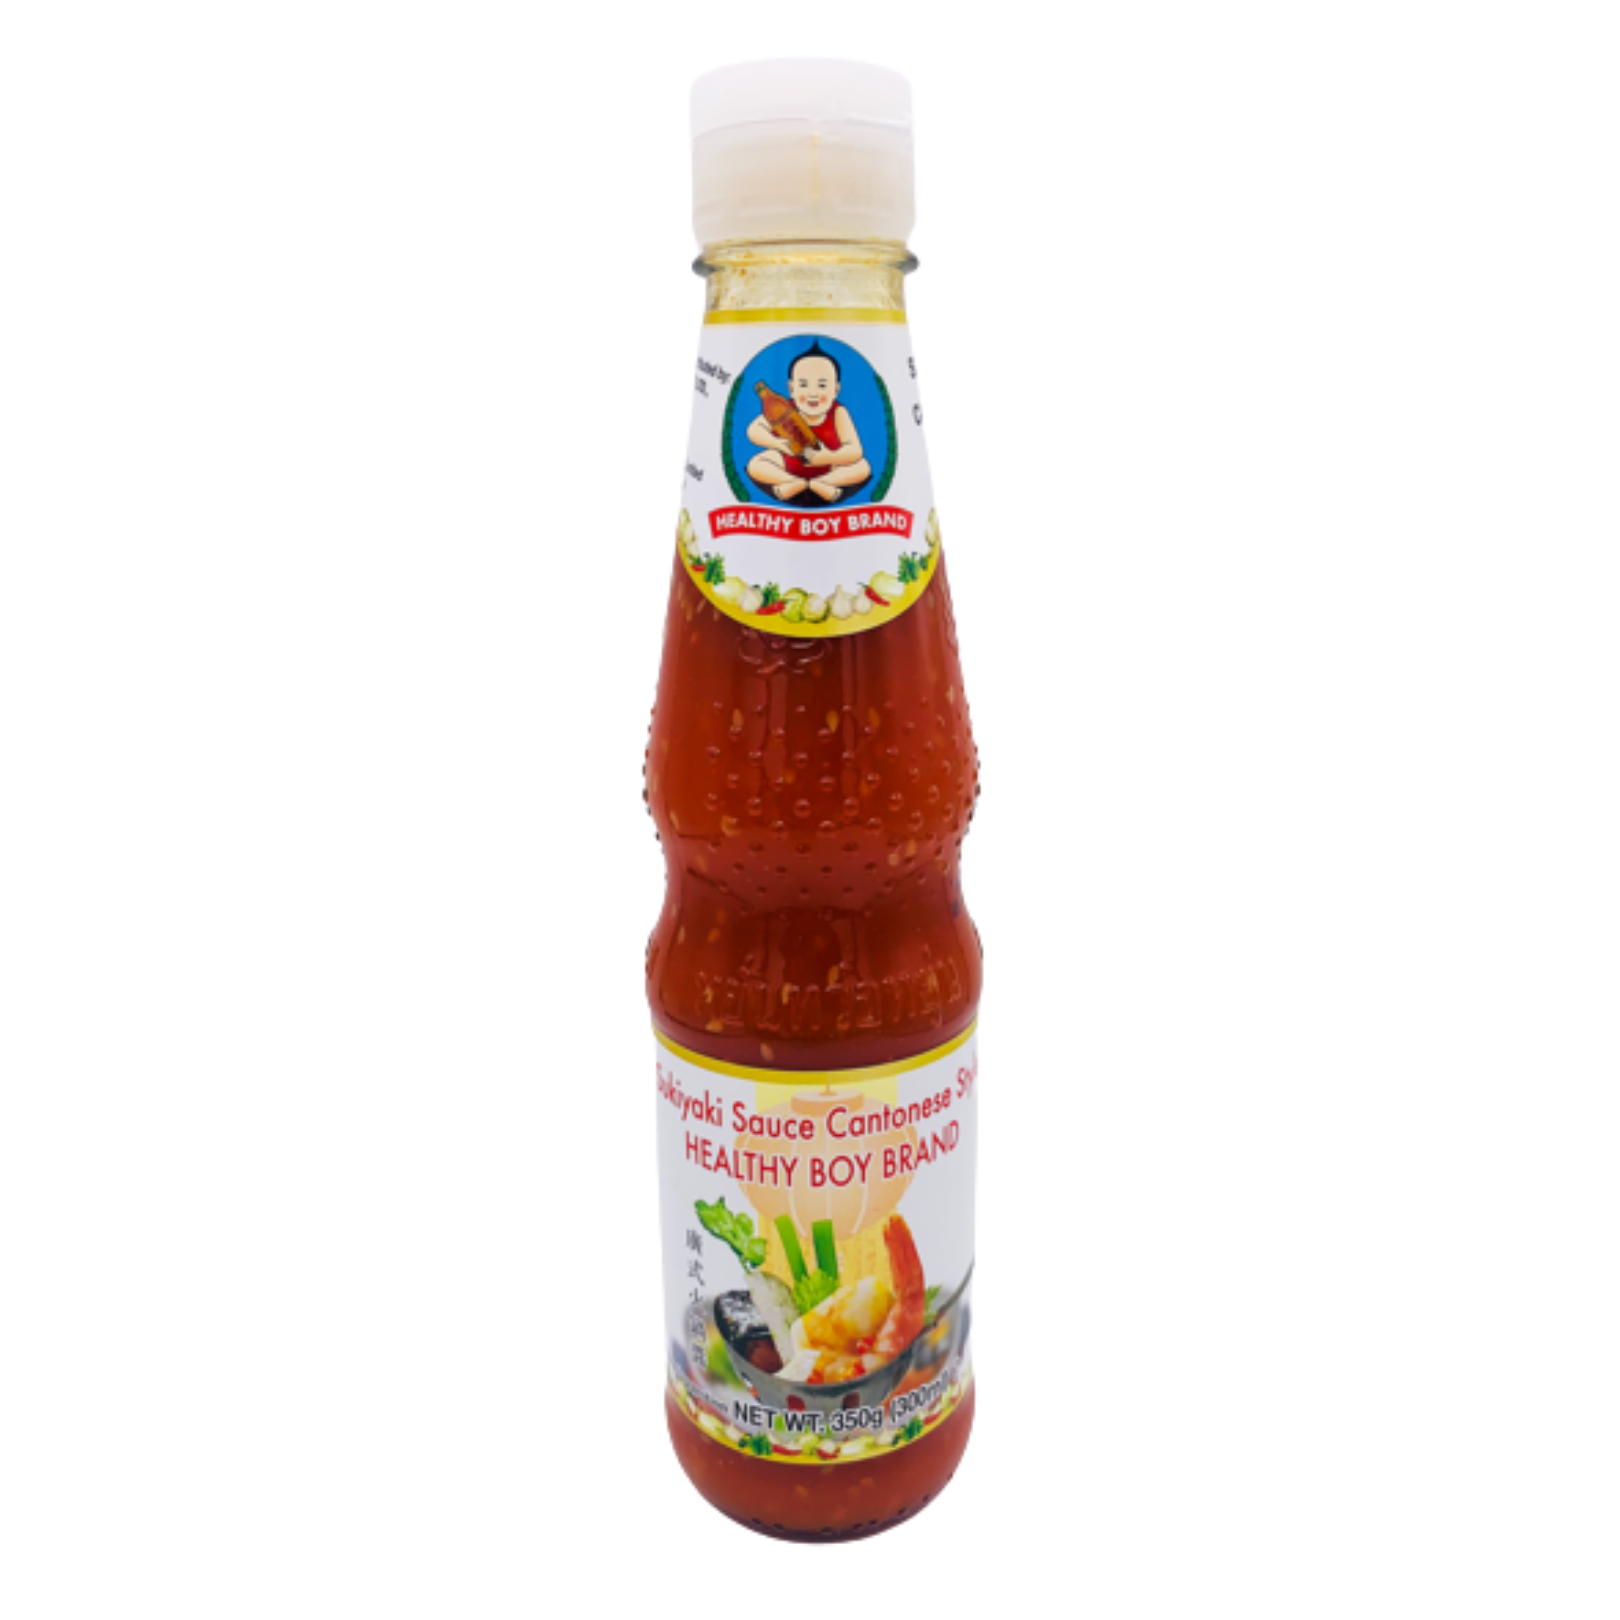 Thai Sukiyaki Cantonese Sauce 300ml bottle by Healthy Boy